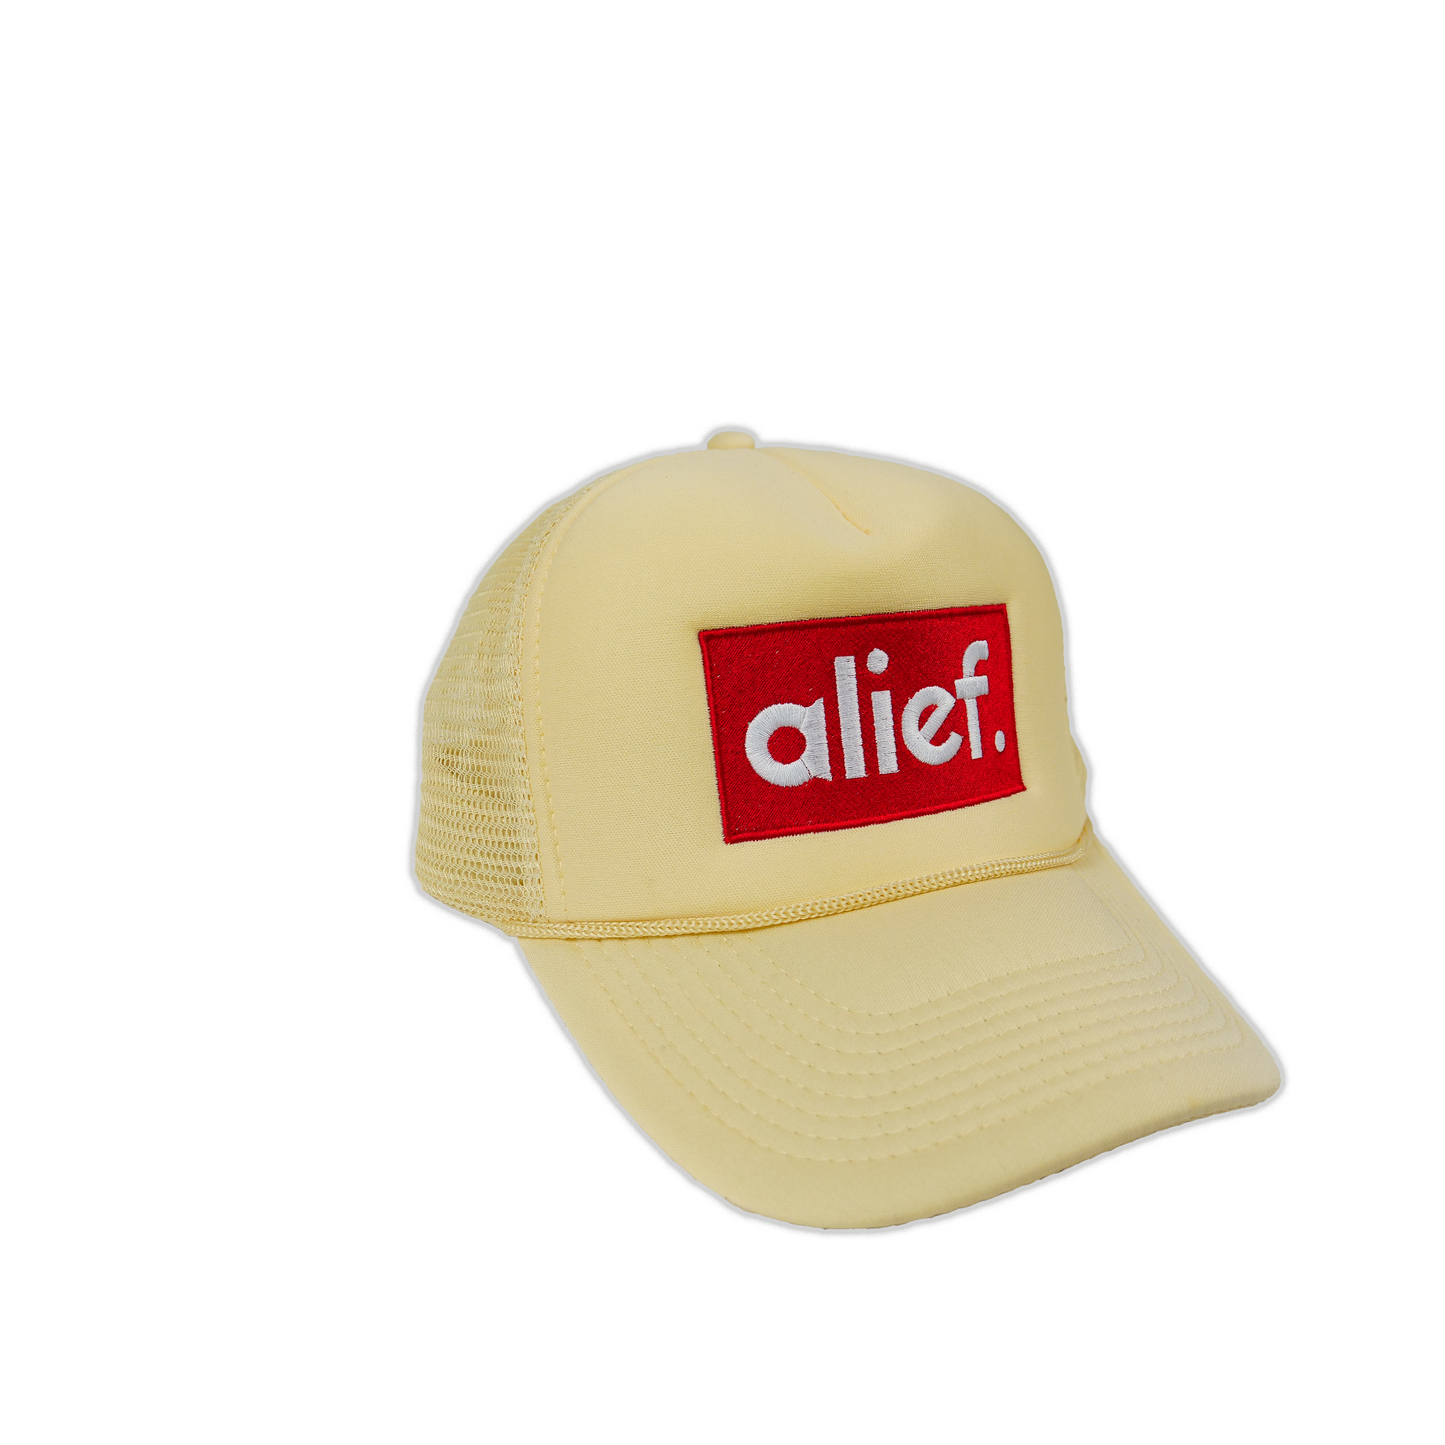 Alief Red Box Trucker Hat - Cream